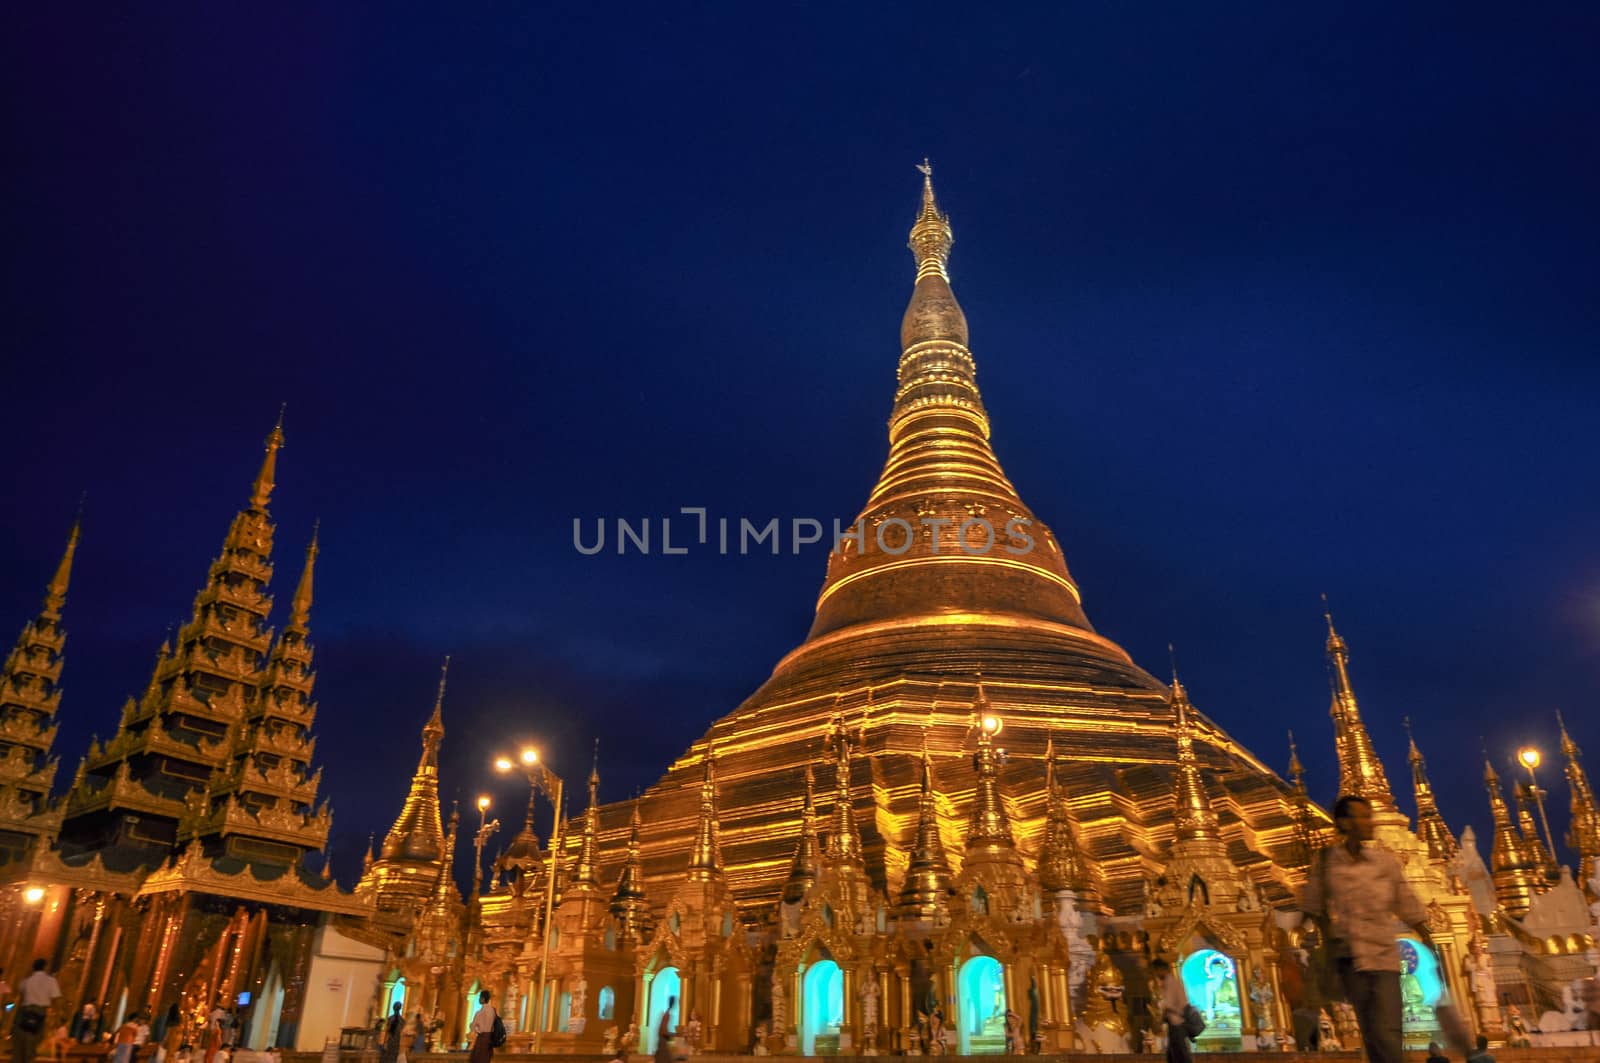 Shwedagon Pagoda in Yangon City at night, Burma (Myanmar) by weltreisendertj